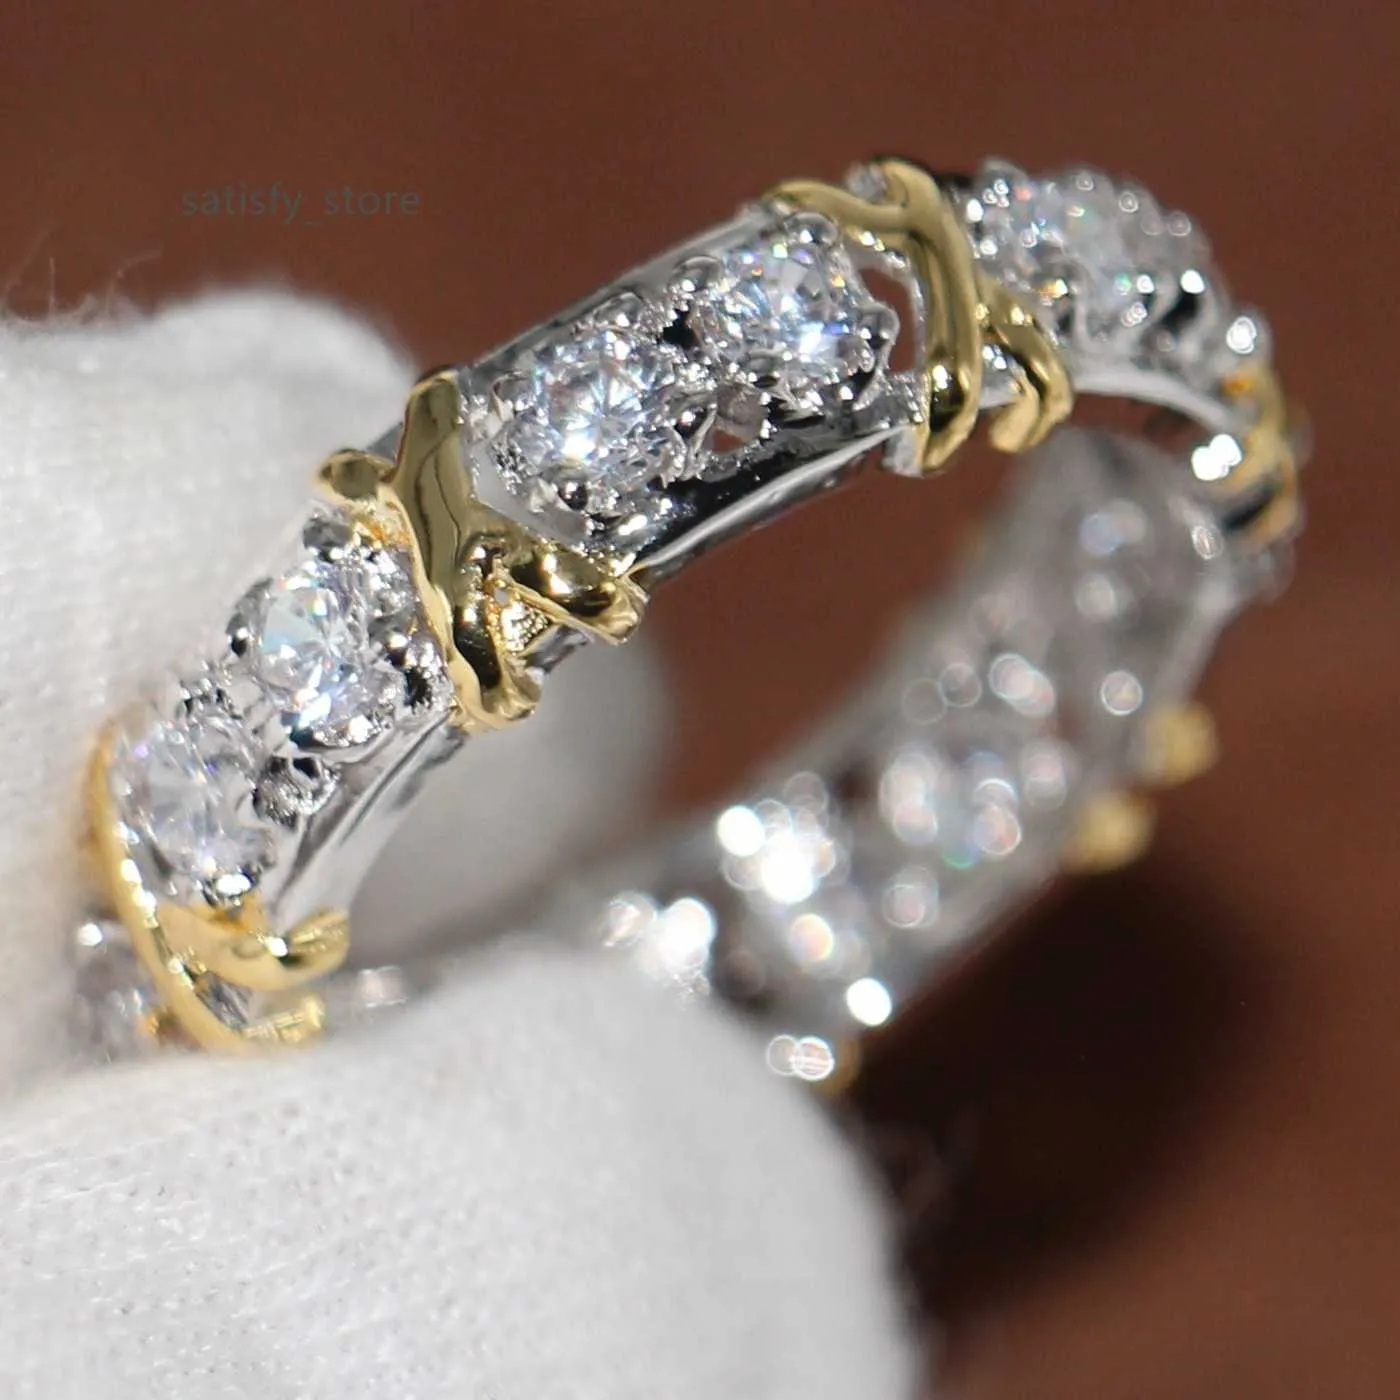 Groothandel professionele eeuwigheid diamonique cz gesimuleerde diamant 10kt wit geel goud gevulde trouwringkruisgrootte 5-11